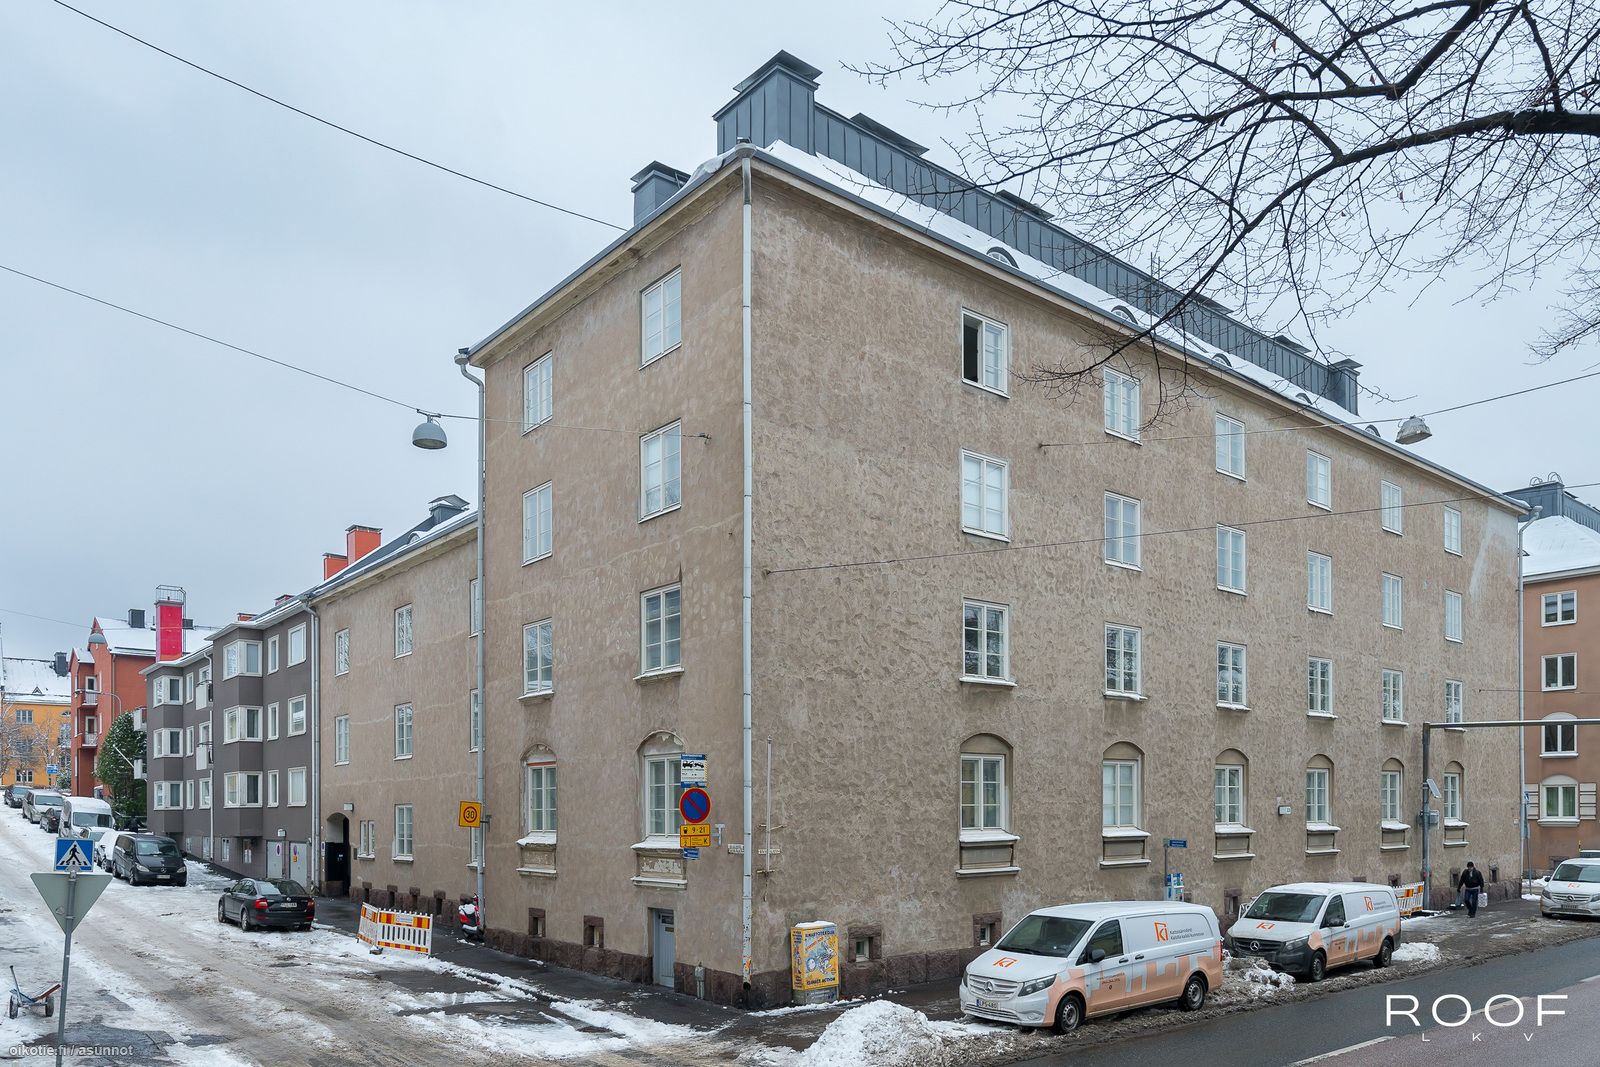 40 m² Mäkelänkatu 23 C, 00550 Helsinki 2h, kk, kph, wc. – Oikotie 17068506  – SKVL